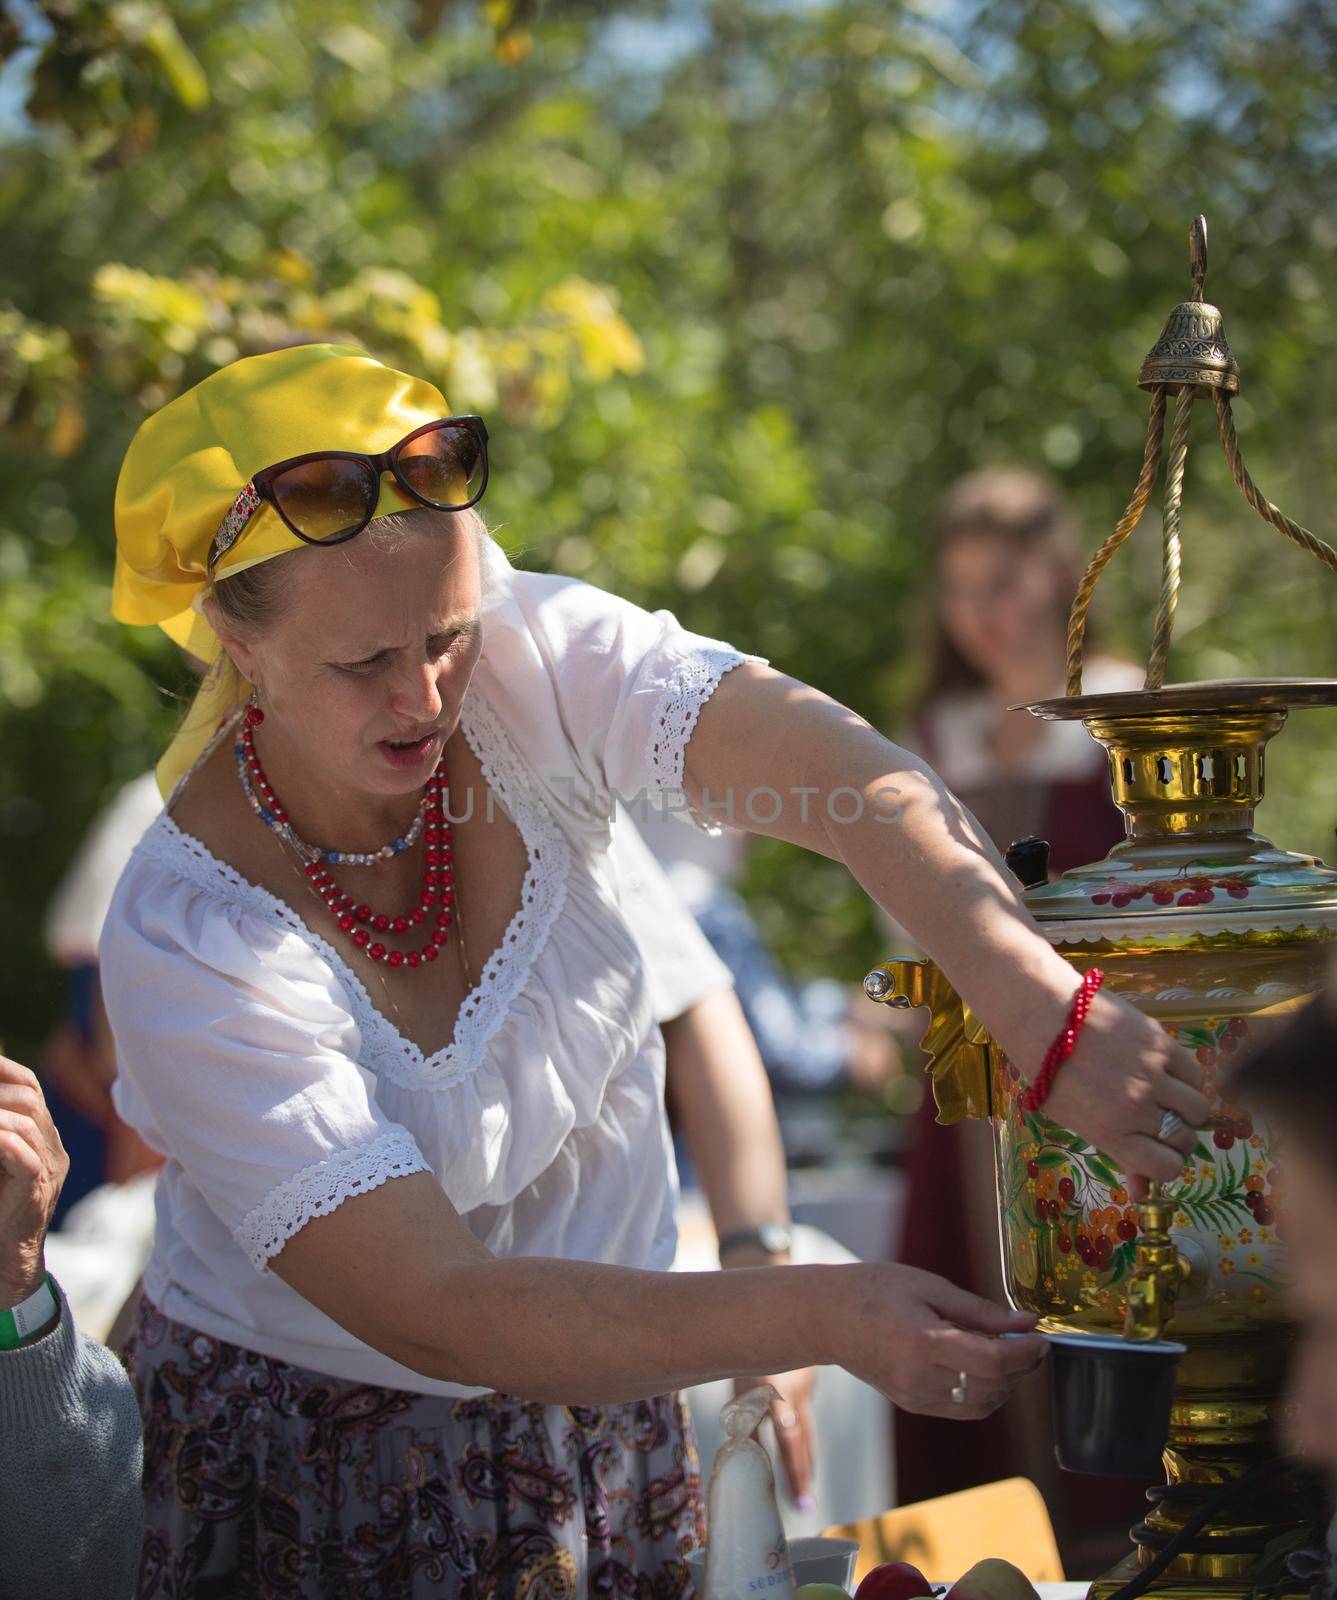 20 August 2018, Krasnovidovo, Russia - mature woman pours tea from a samovar. folk fair